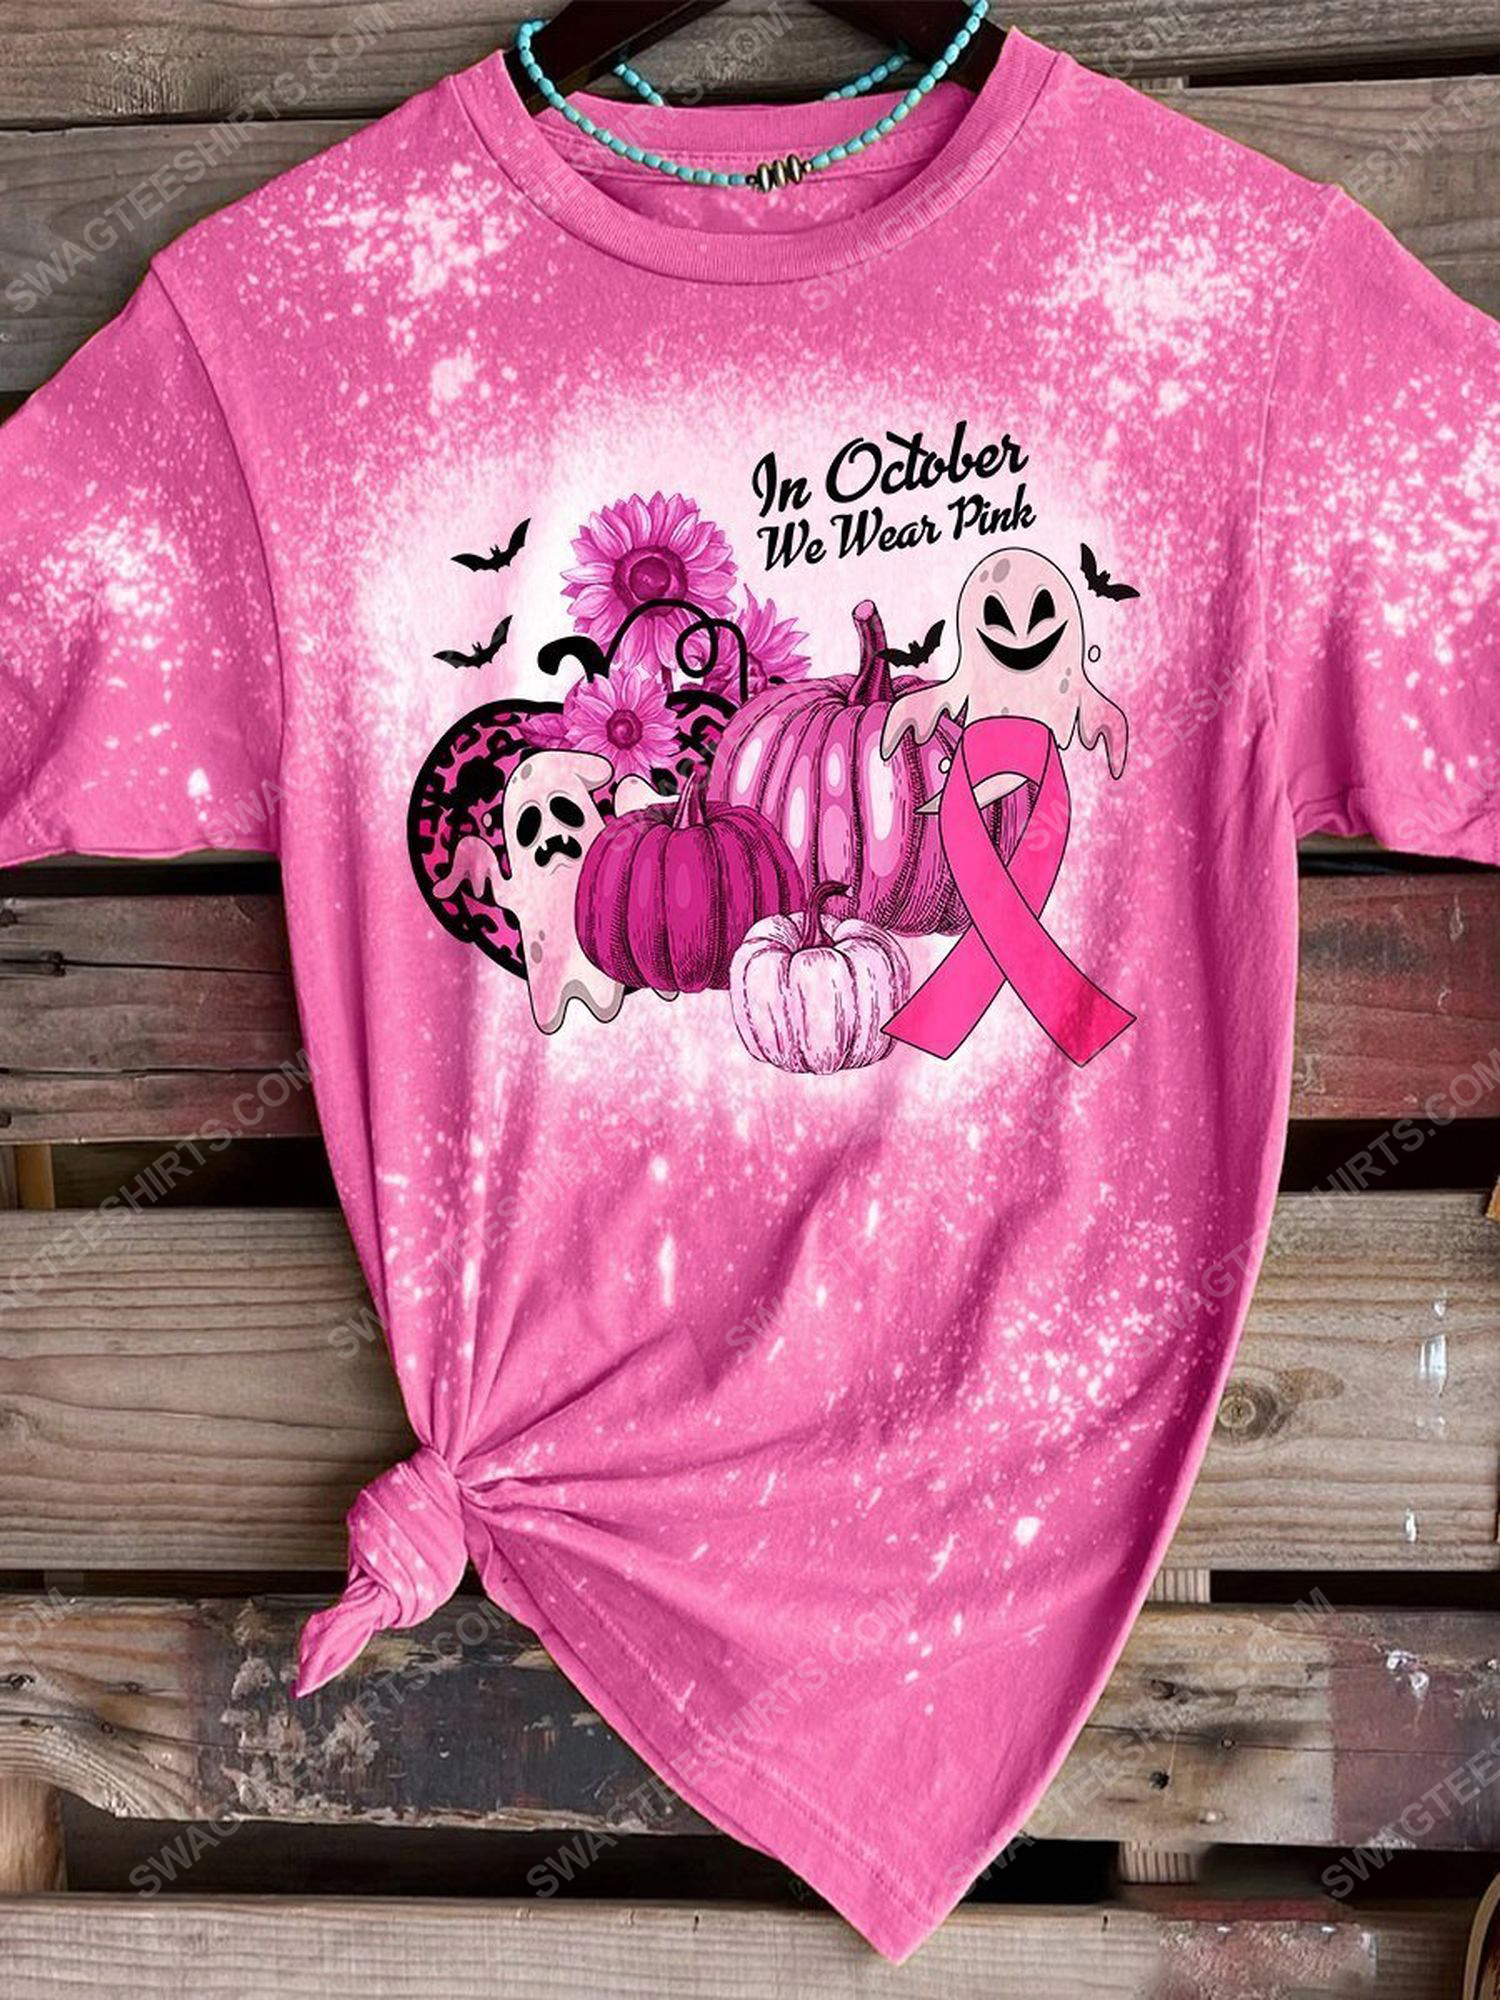 Breast cancer awareness in october we wear pink pumpkin and bat ​bleached shirt 1